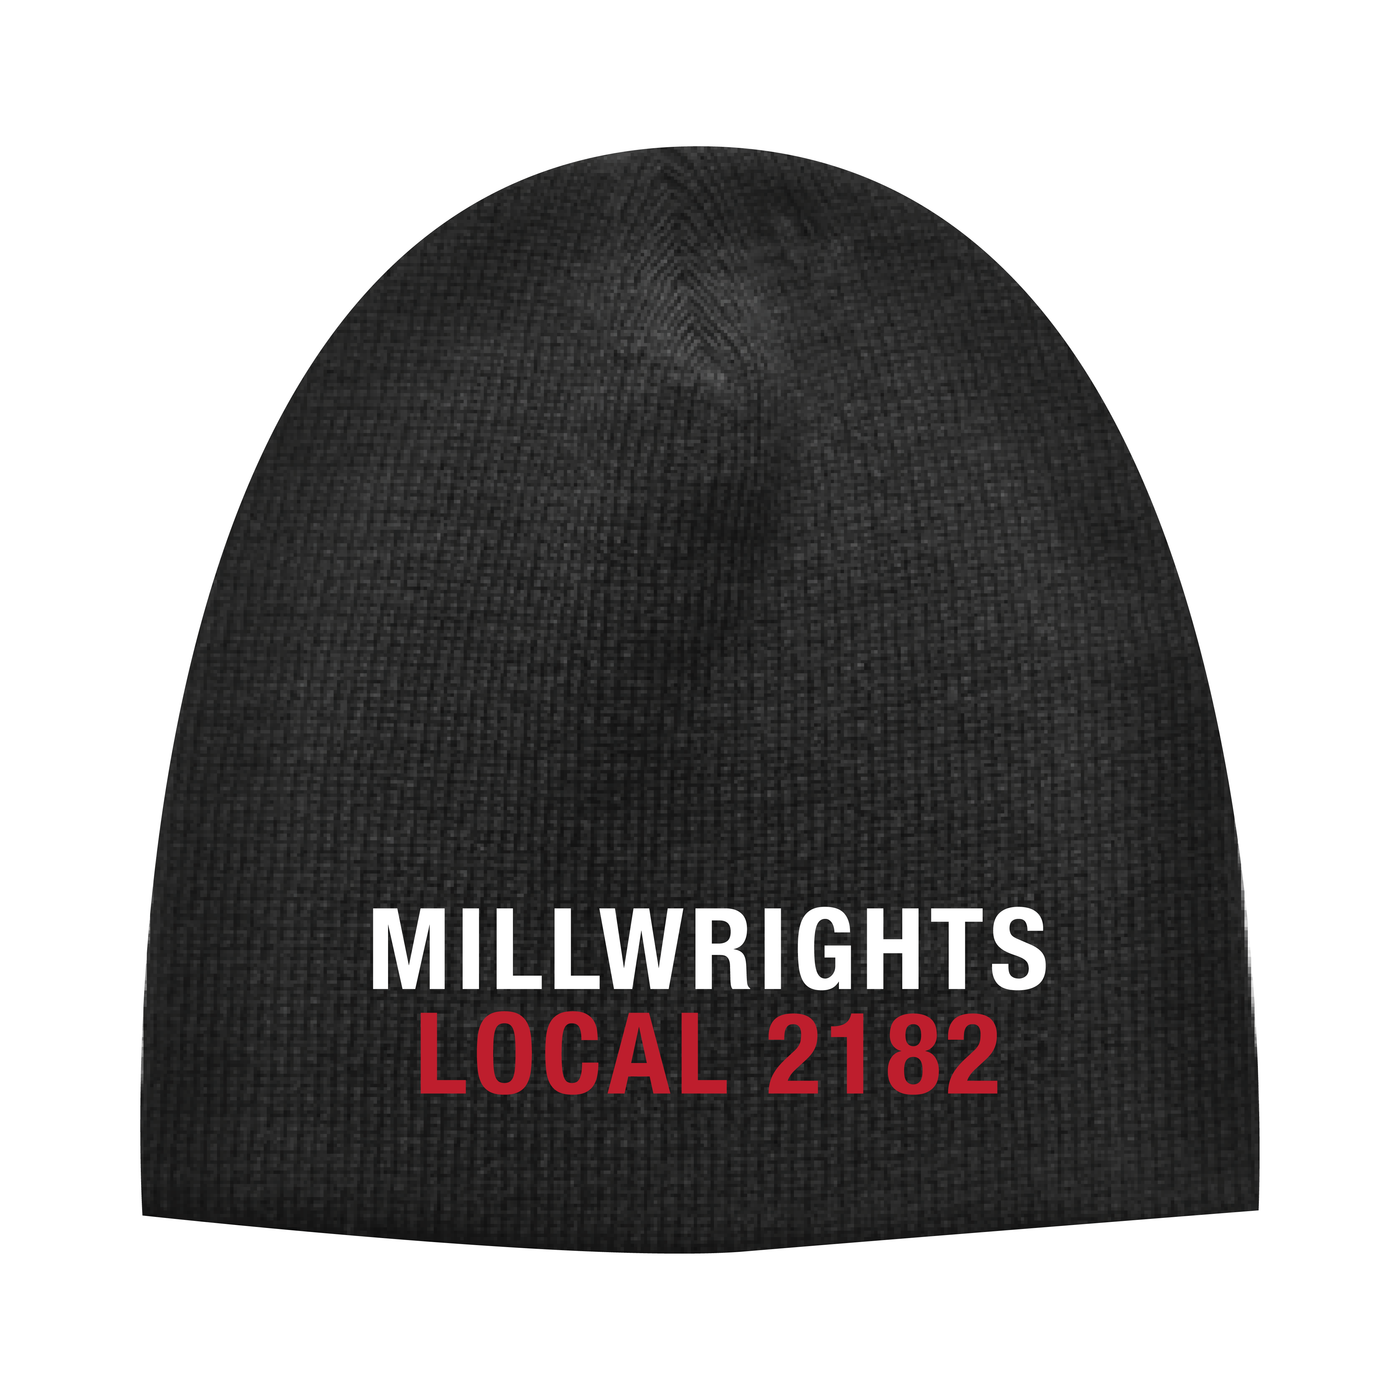 Millwrights Local 2182 - Beanie (Black)